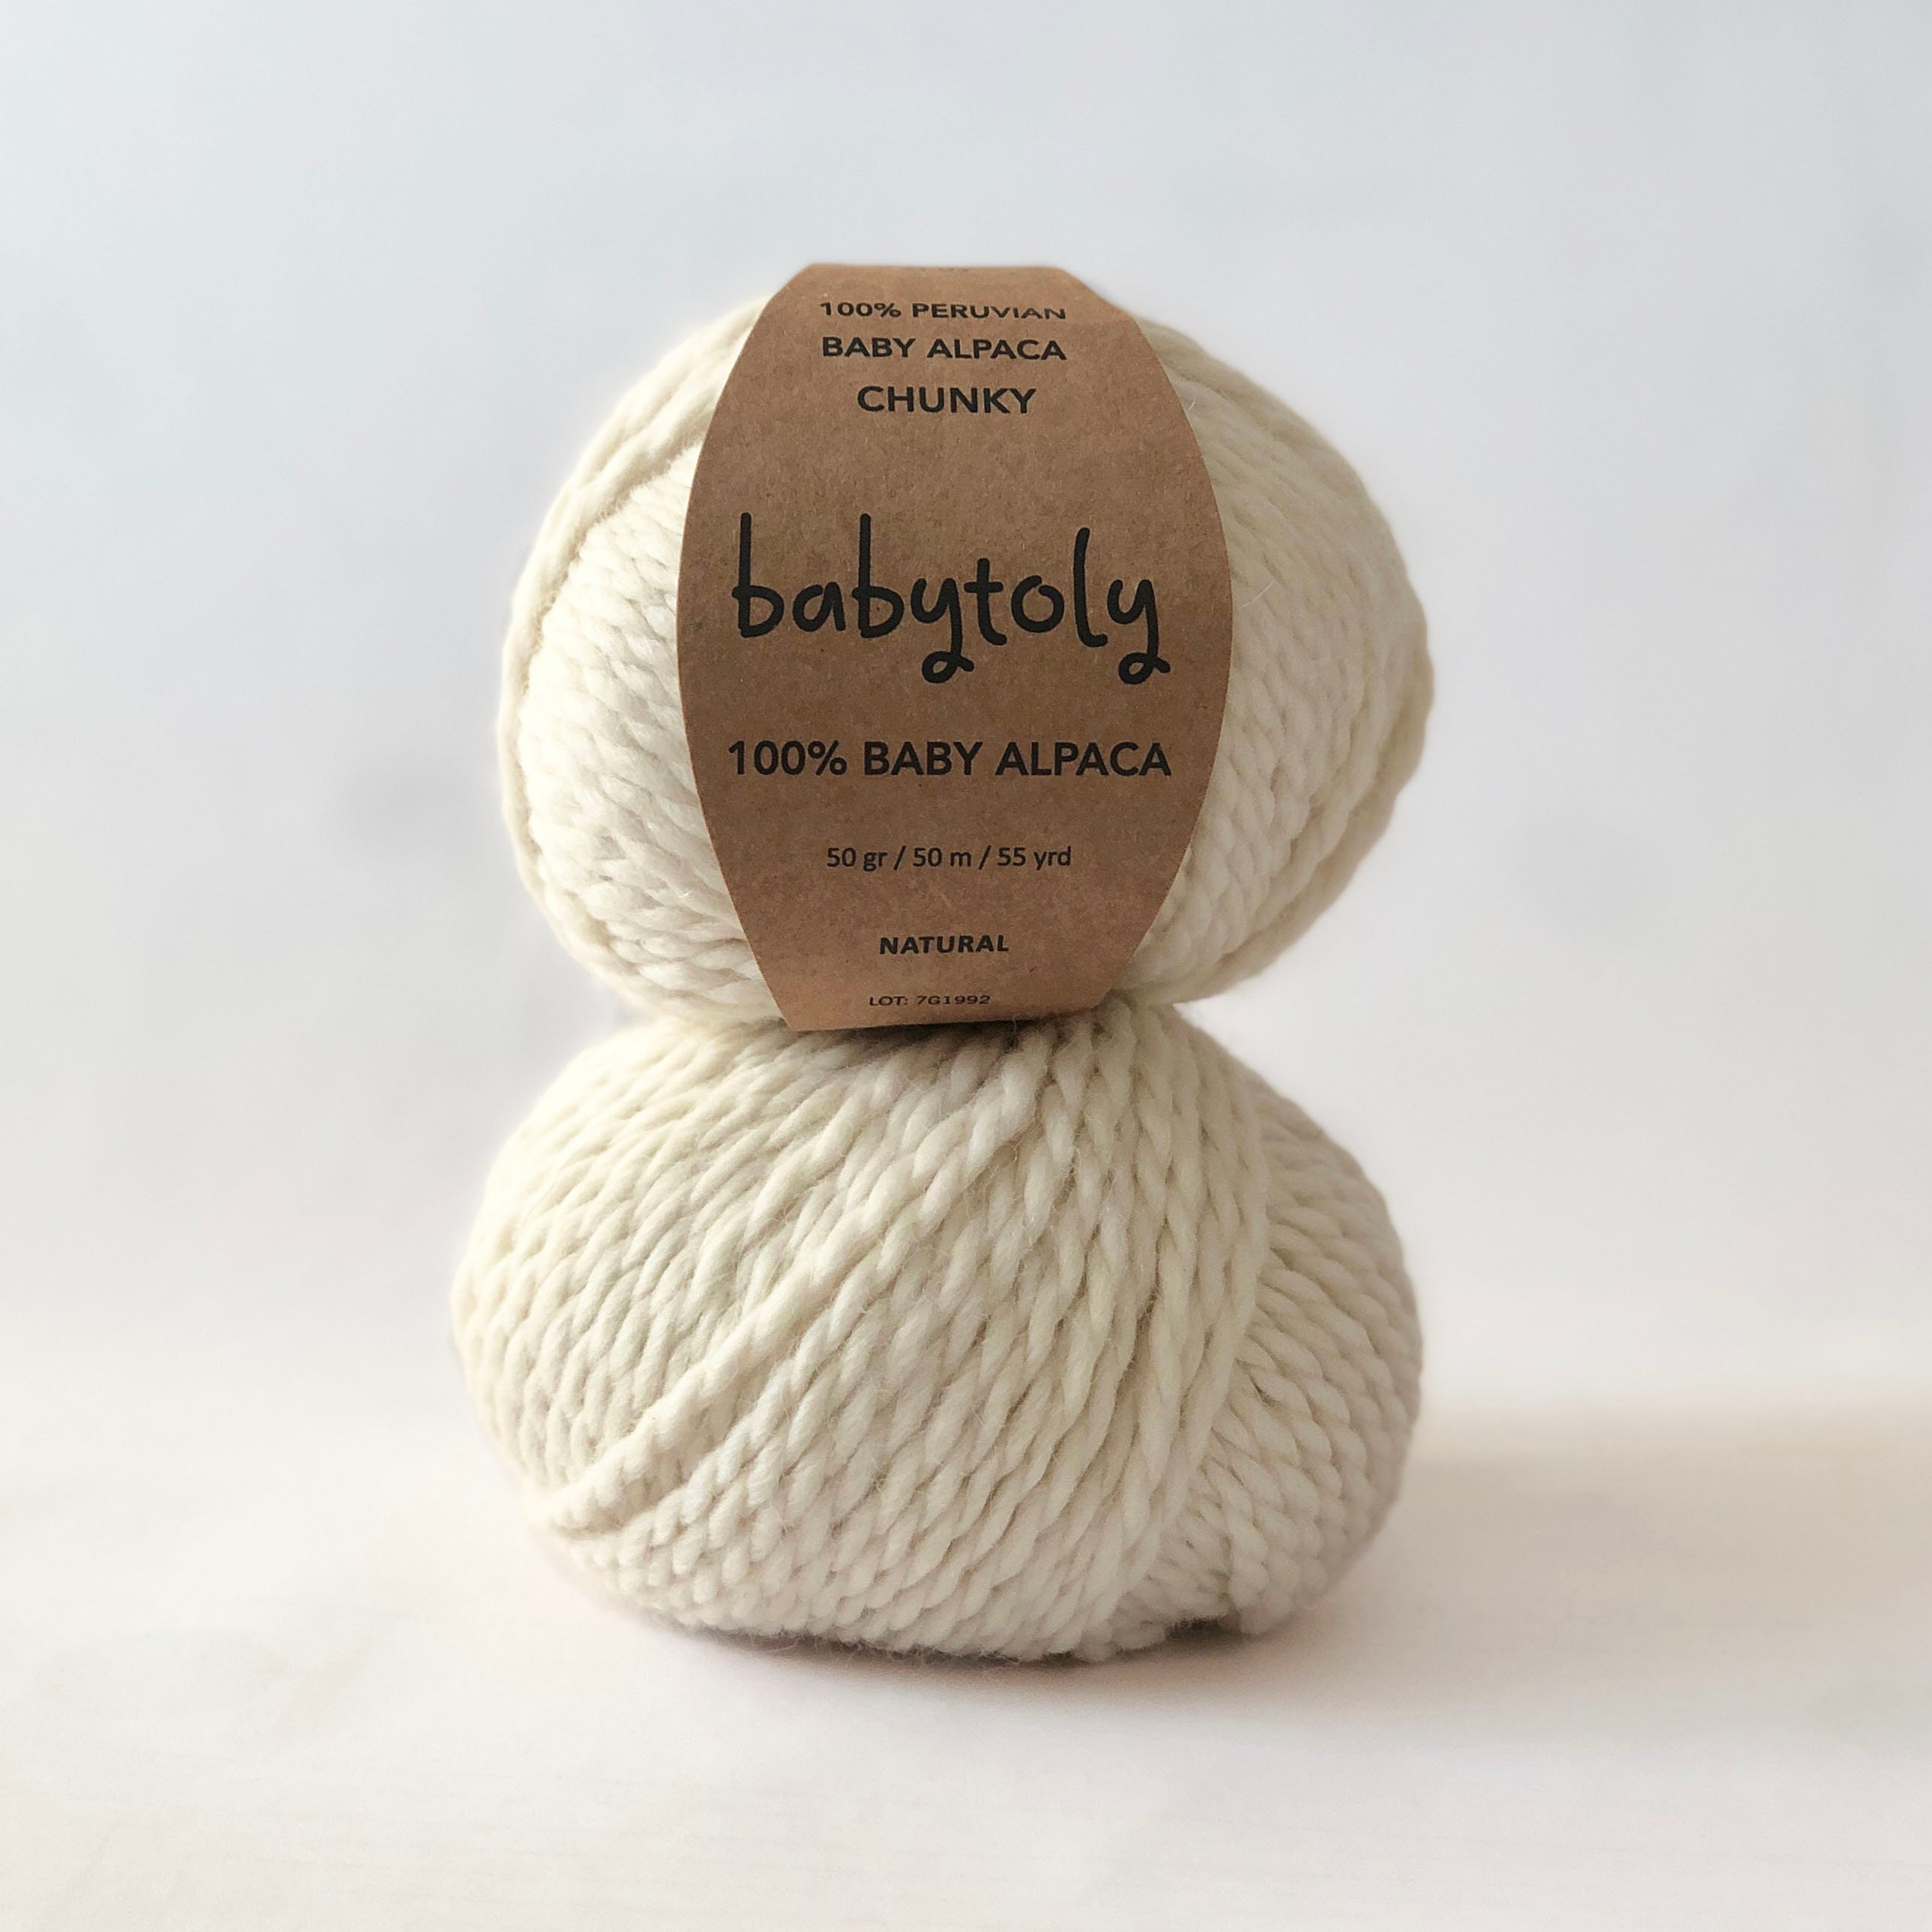 Brown Baby Alpaca Yarn for Crocheting or Knitting/ INDIECITA DK Baby Alpaca  Yarn/ Luxurious and Soft Alpaca Yarn for Hats & More 